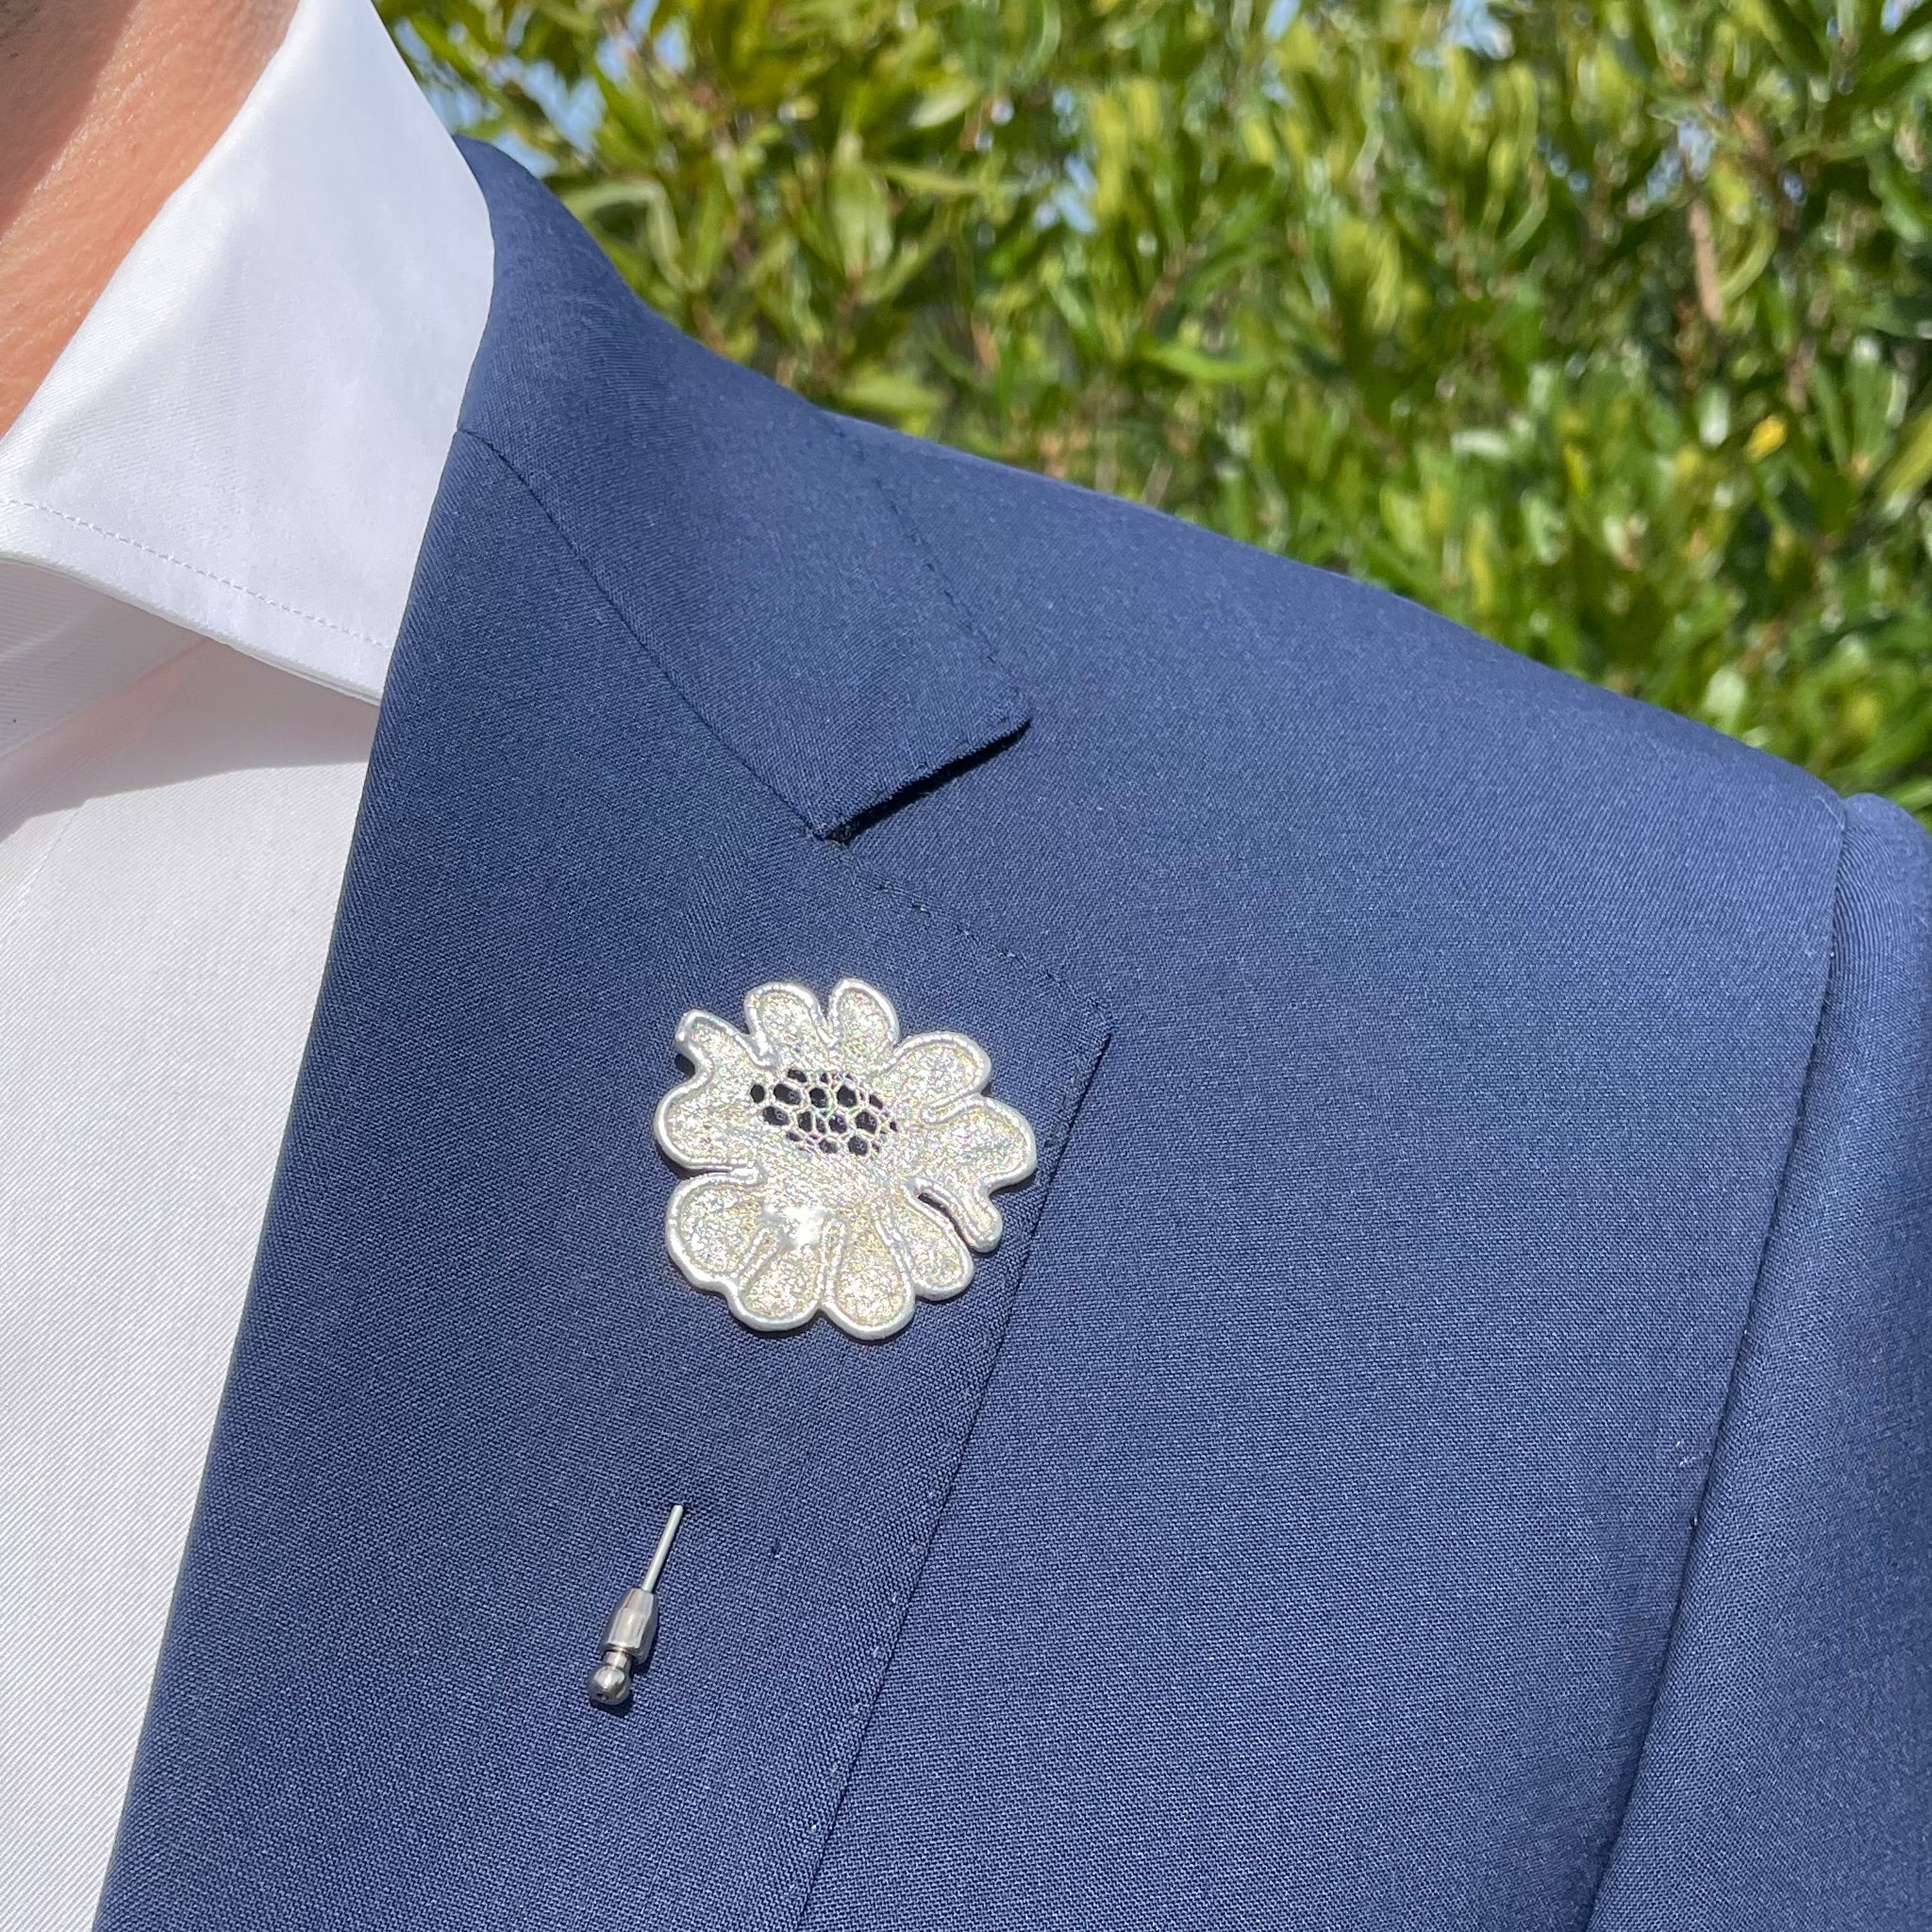 Pin on wedding